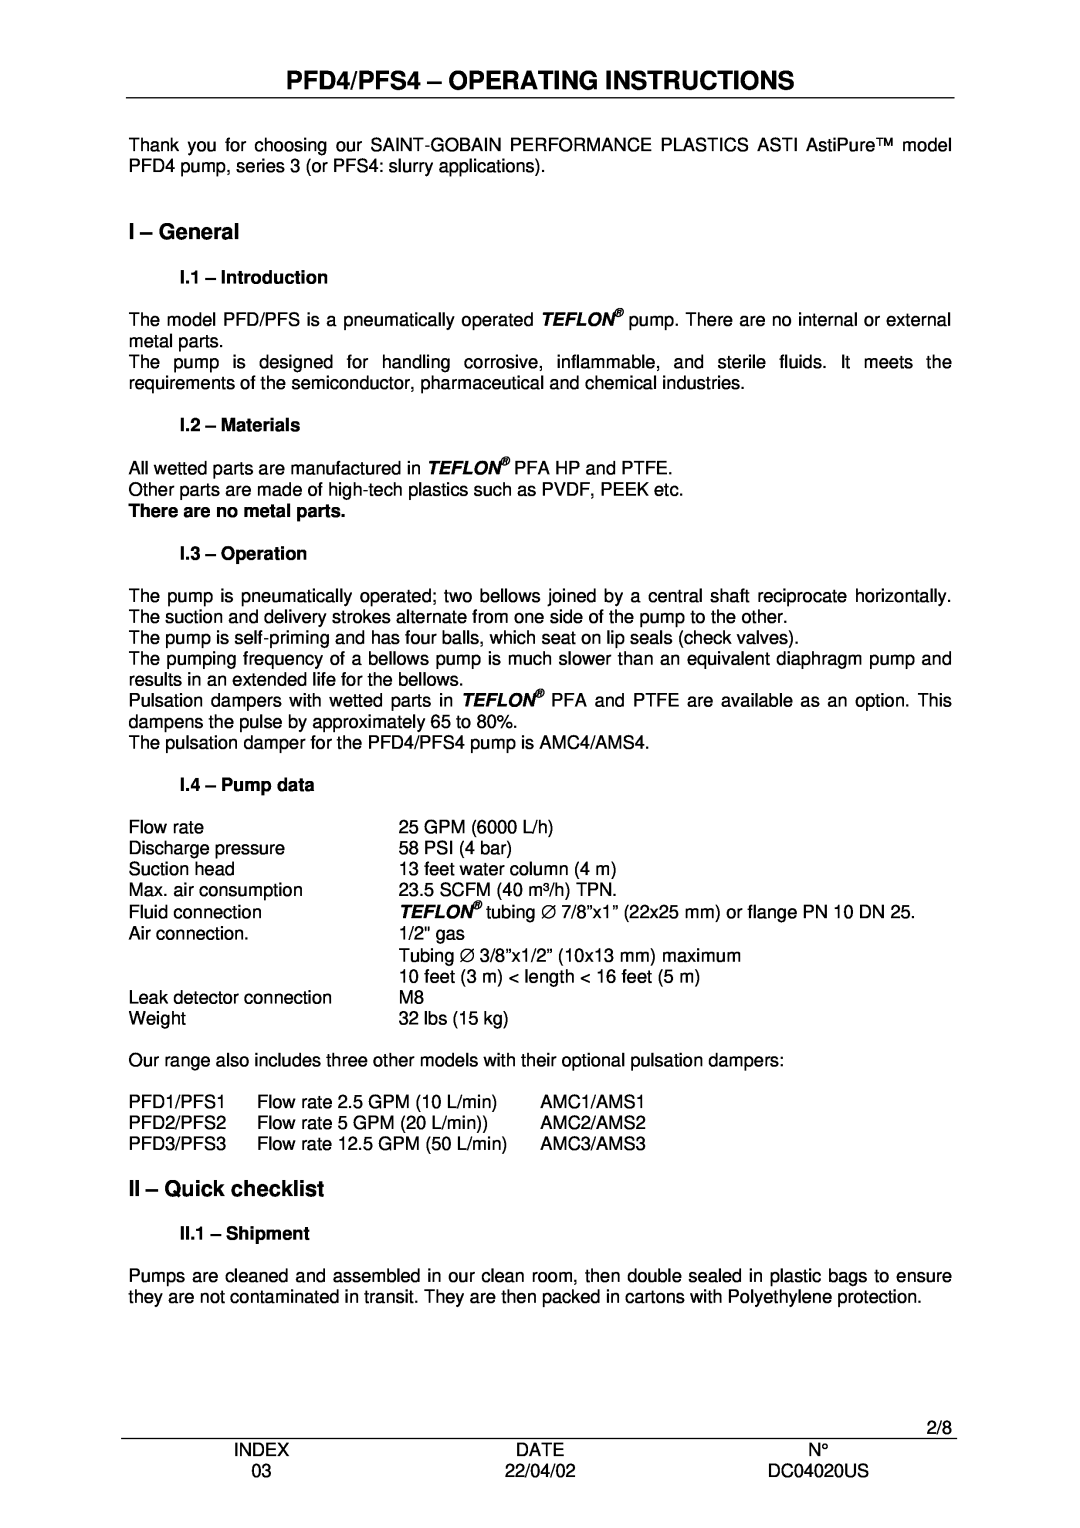 Saint Gobain Vidros PFS4, PFD4 I - General, II - Quick checklist, I.1 - Introduction, I.2 - Materials, I.4 - Pump data 